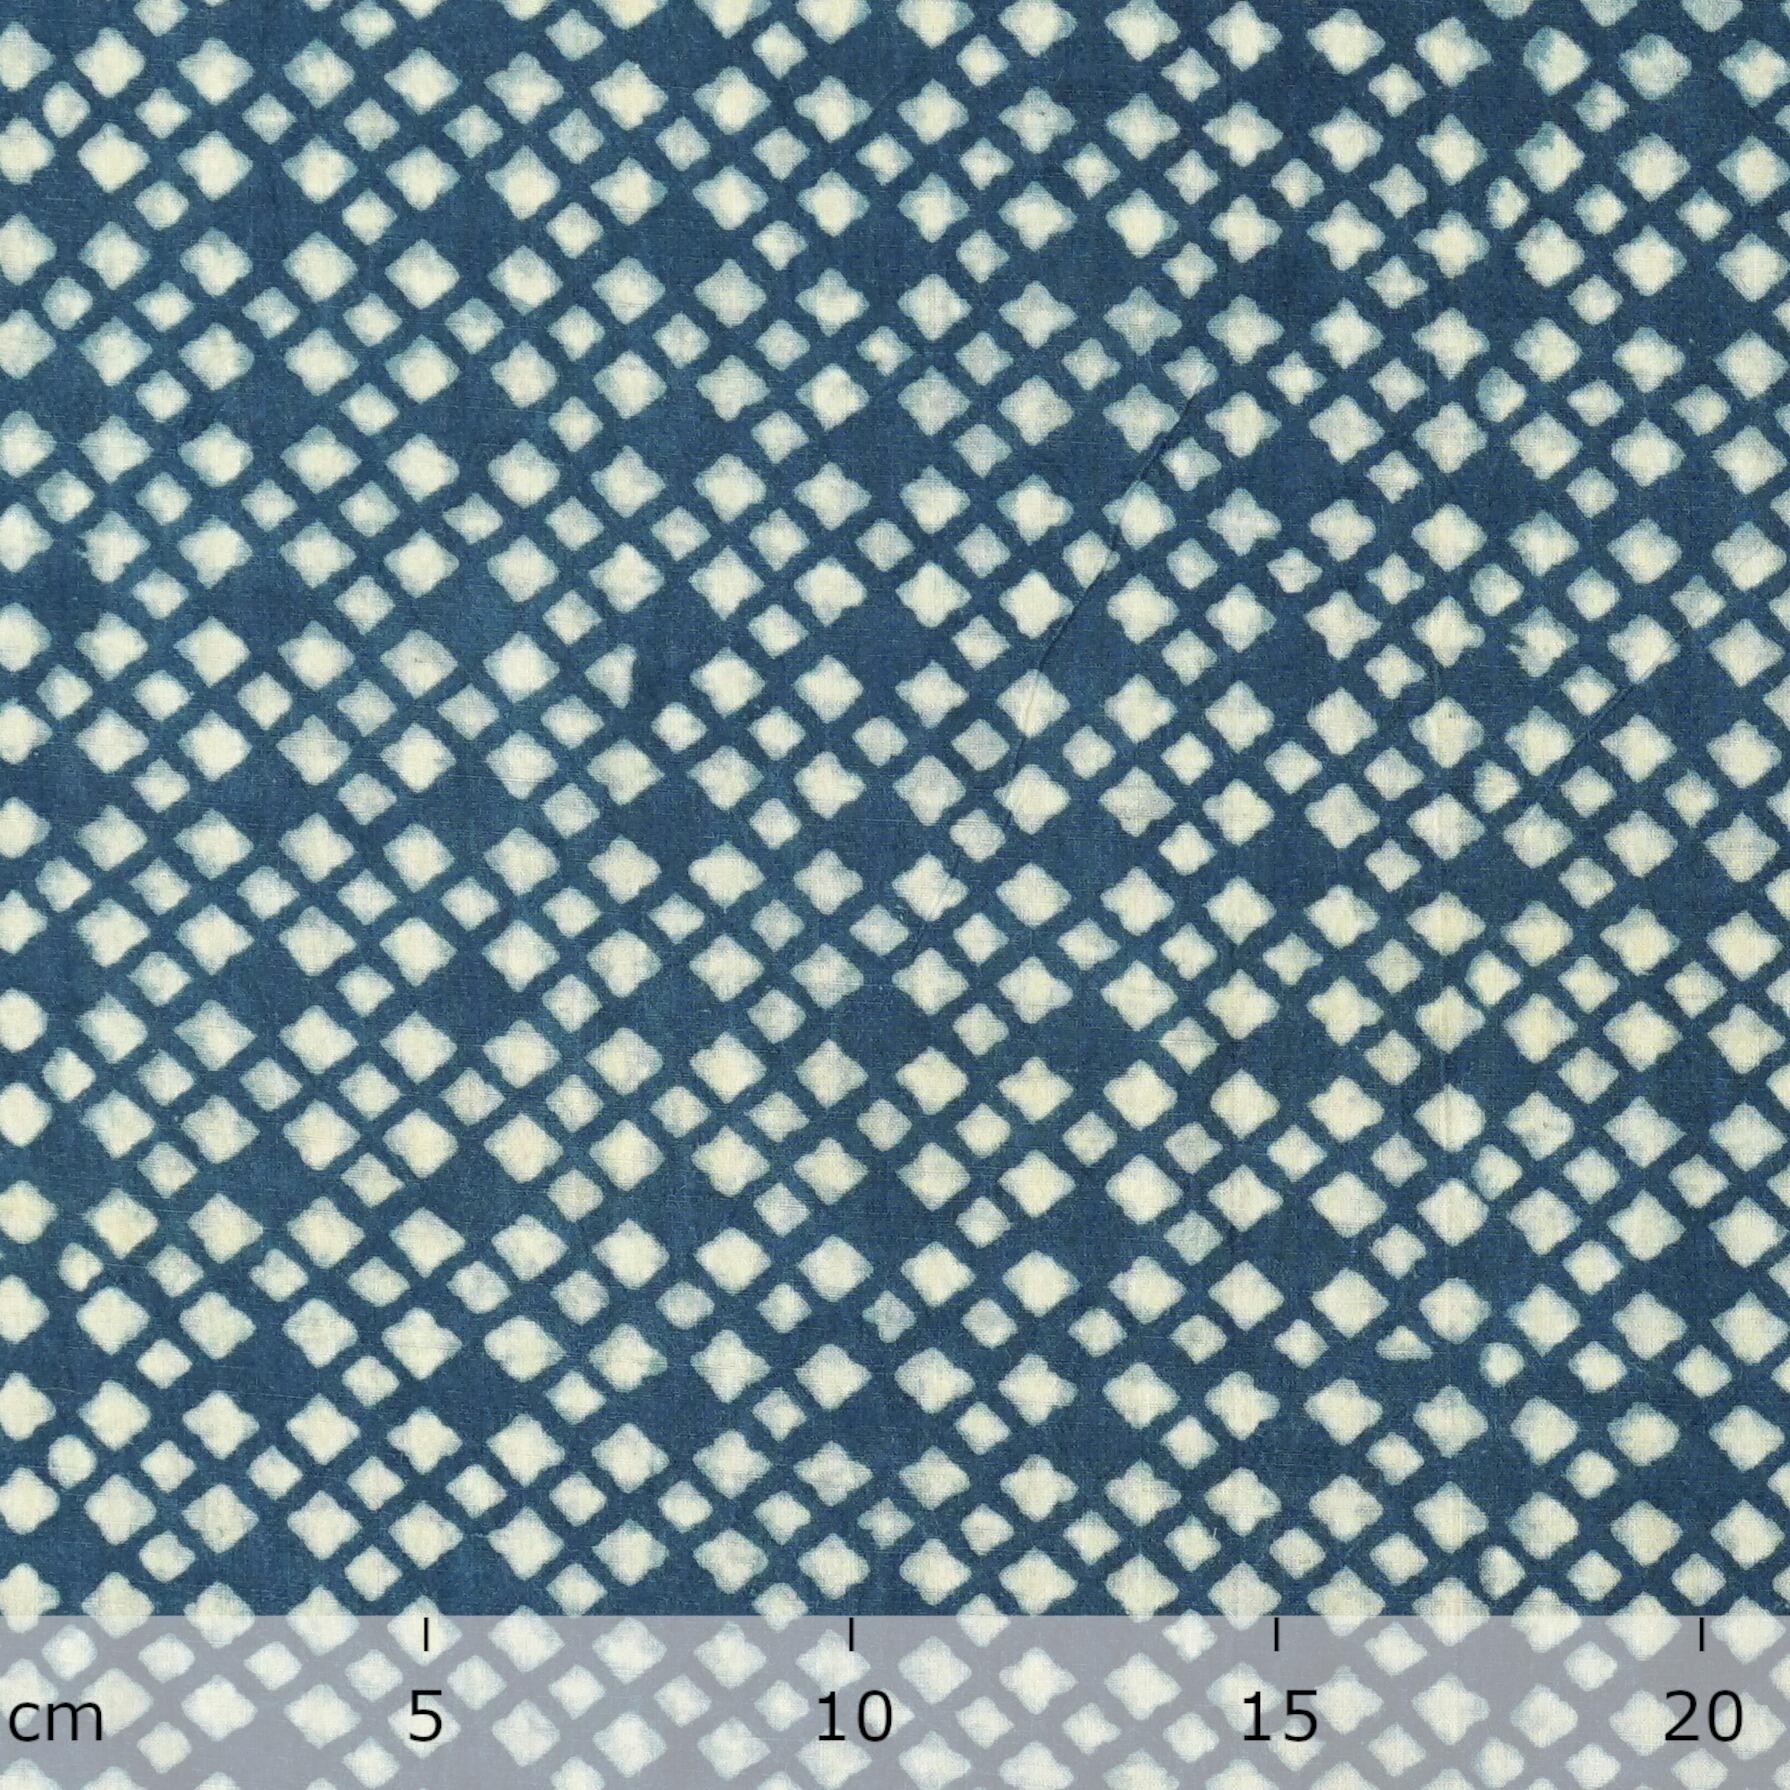 SIK28 - Indian Woodblock-Printed Cotton Fabric - Mosaic Design - Indigo Dye - Ruler